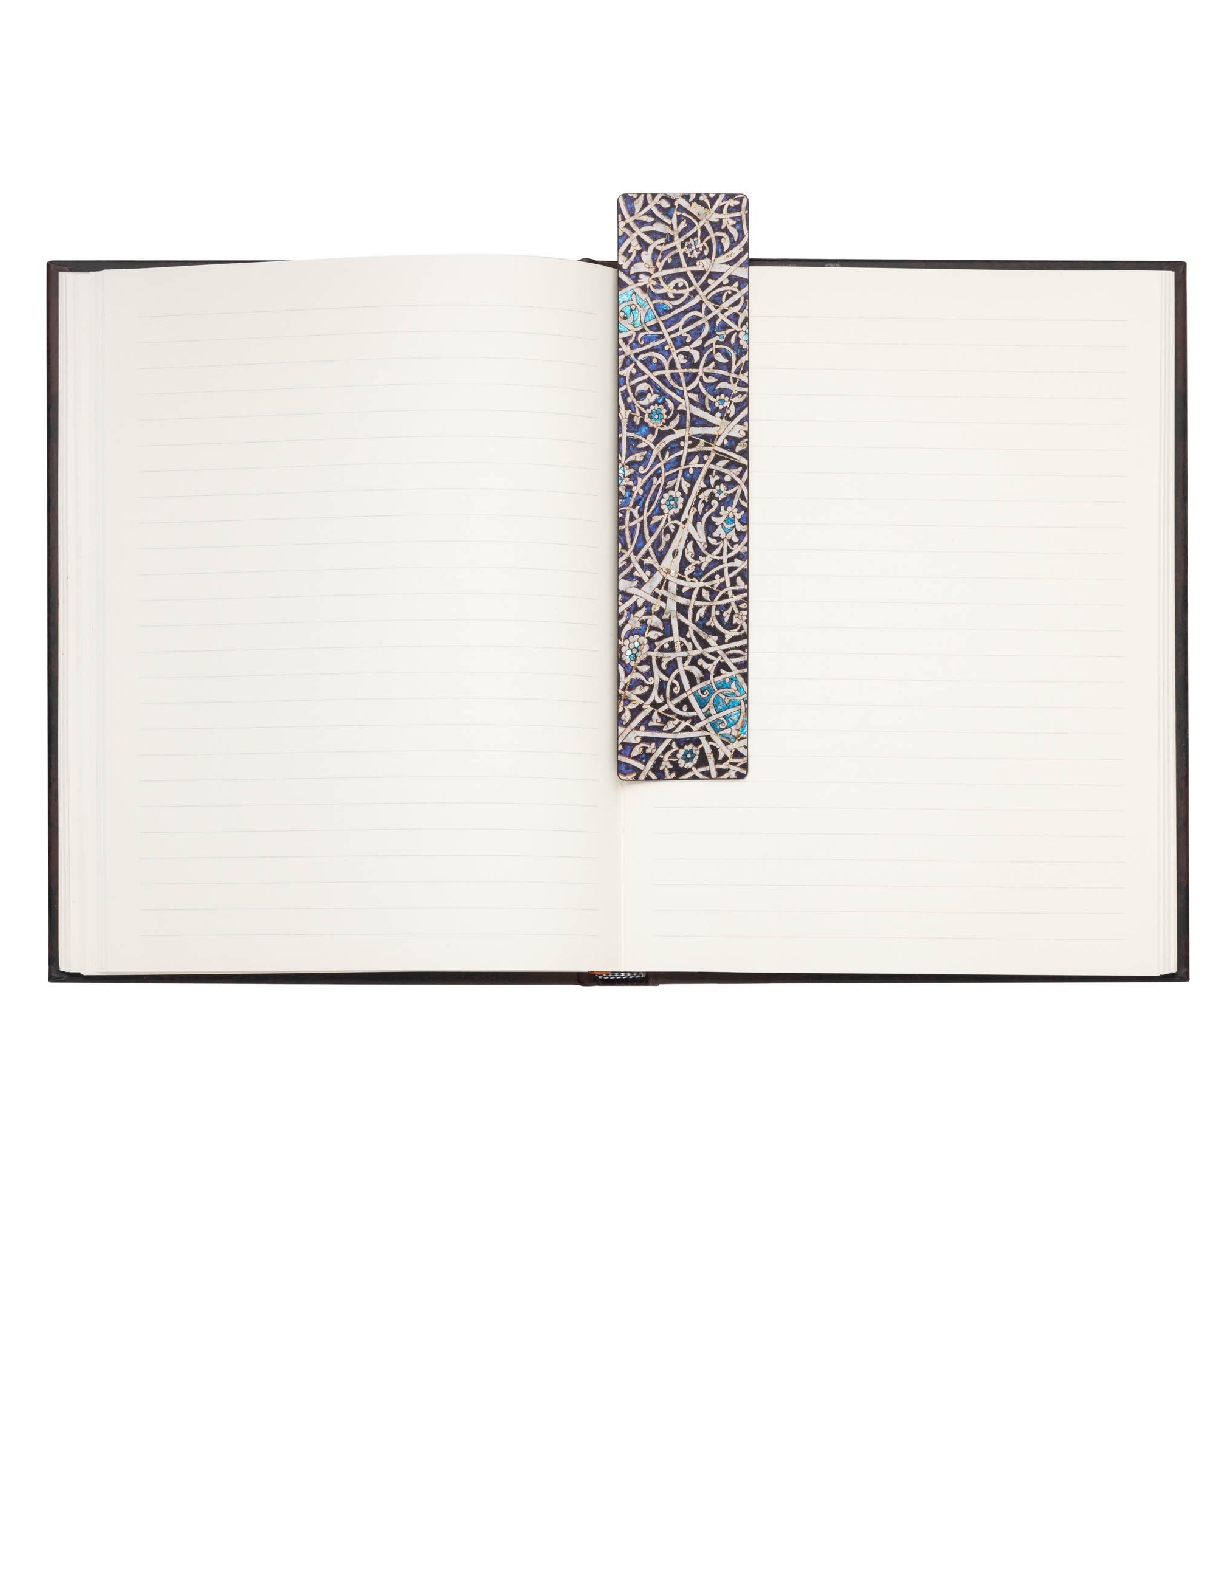 Granada Turquoise, Moorish Mosaic, Bookmark